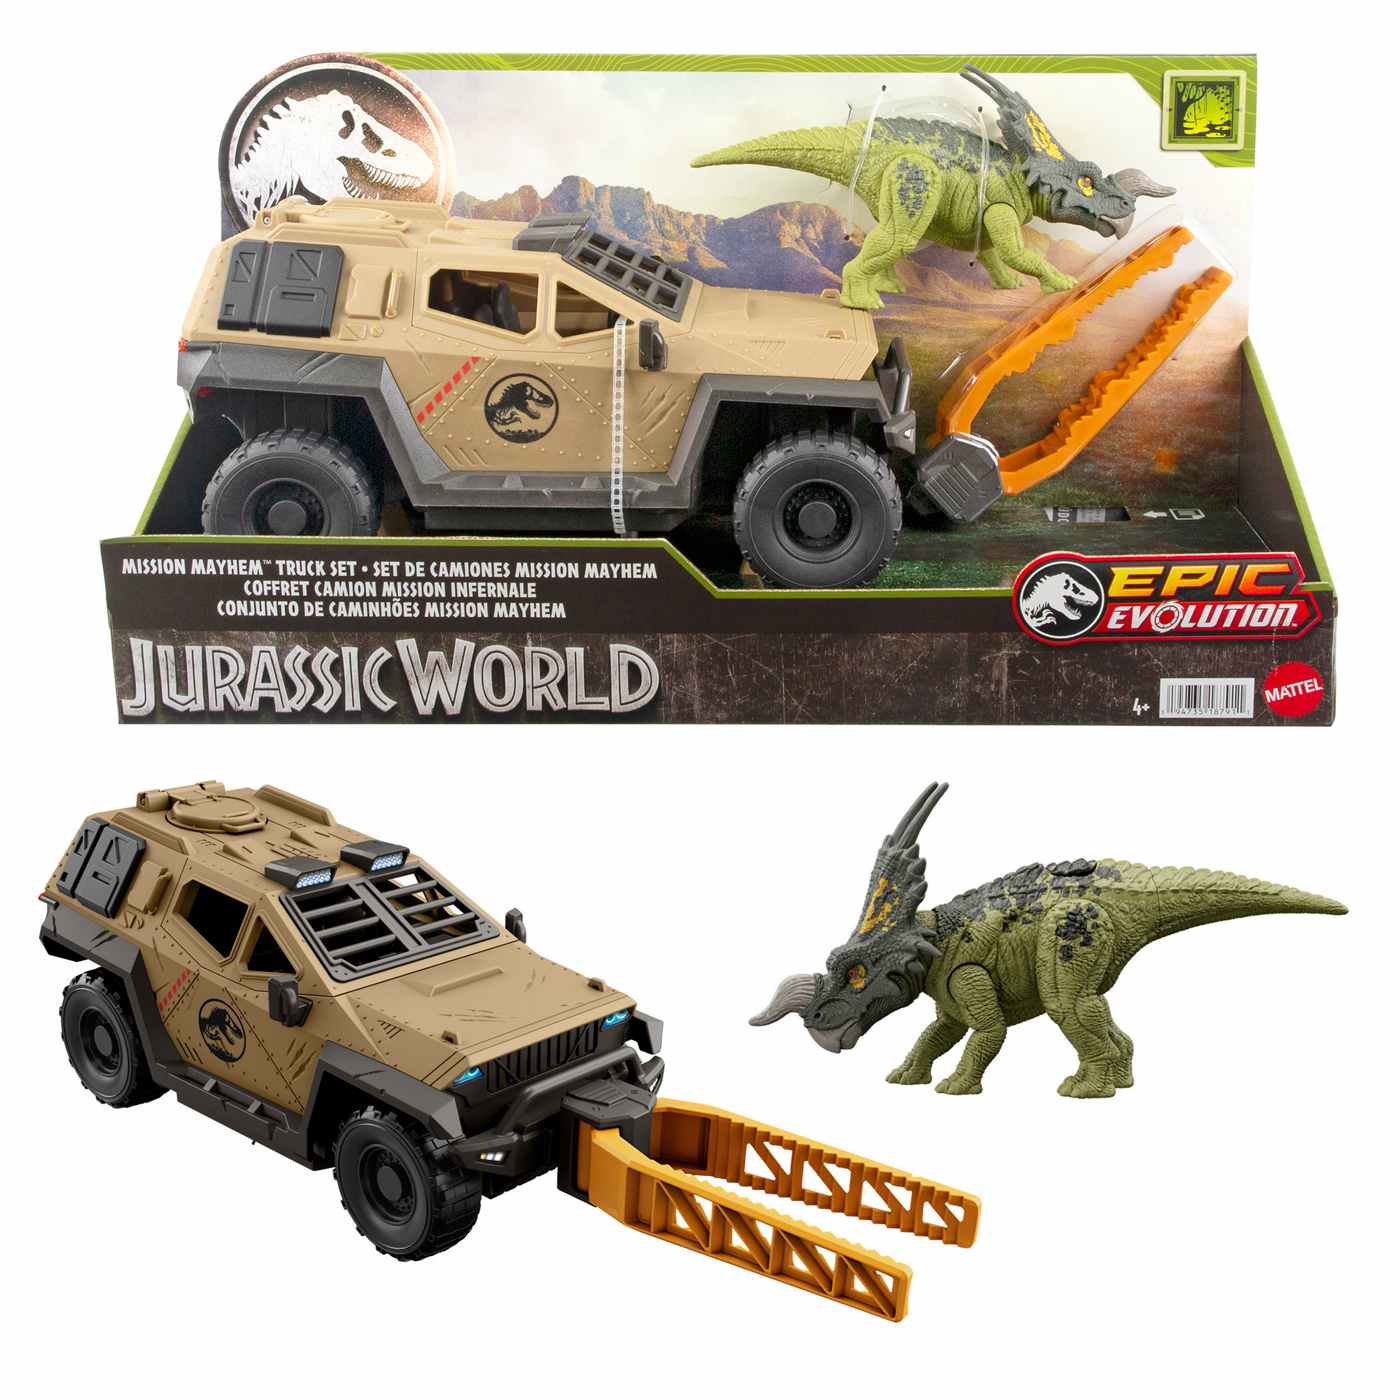 Jurassic World Mission Mayhem Truck Set; image 2 of 3